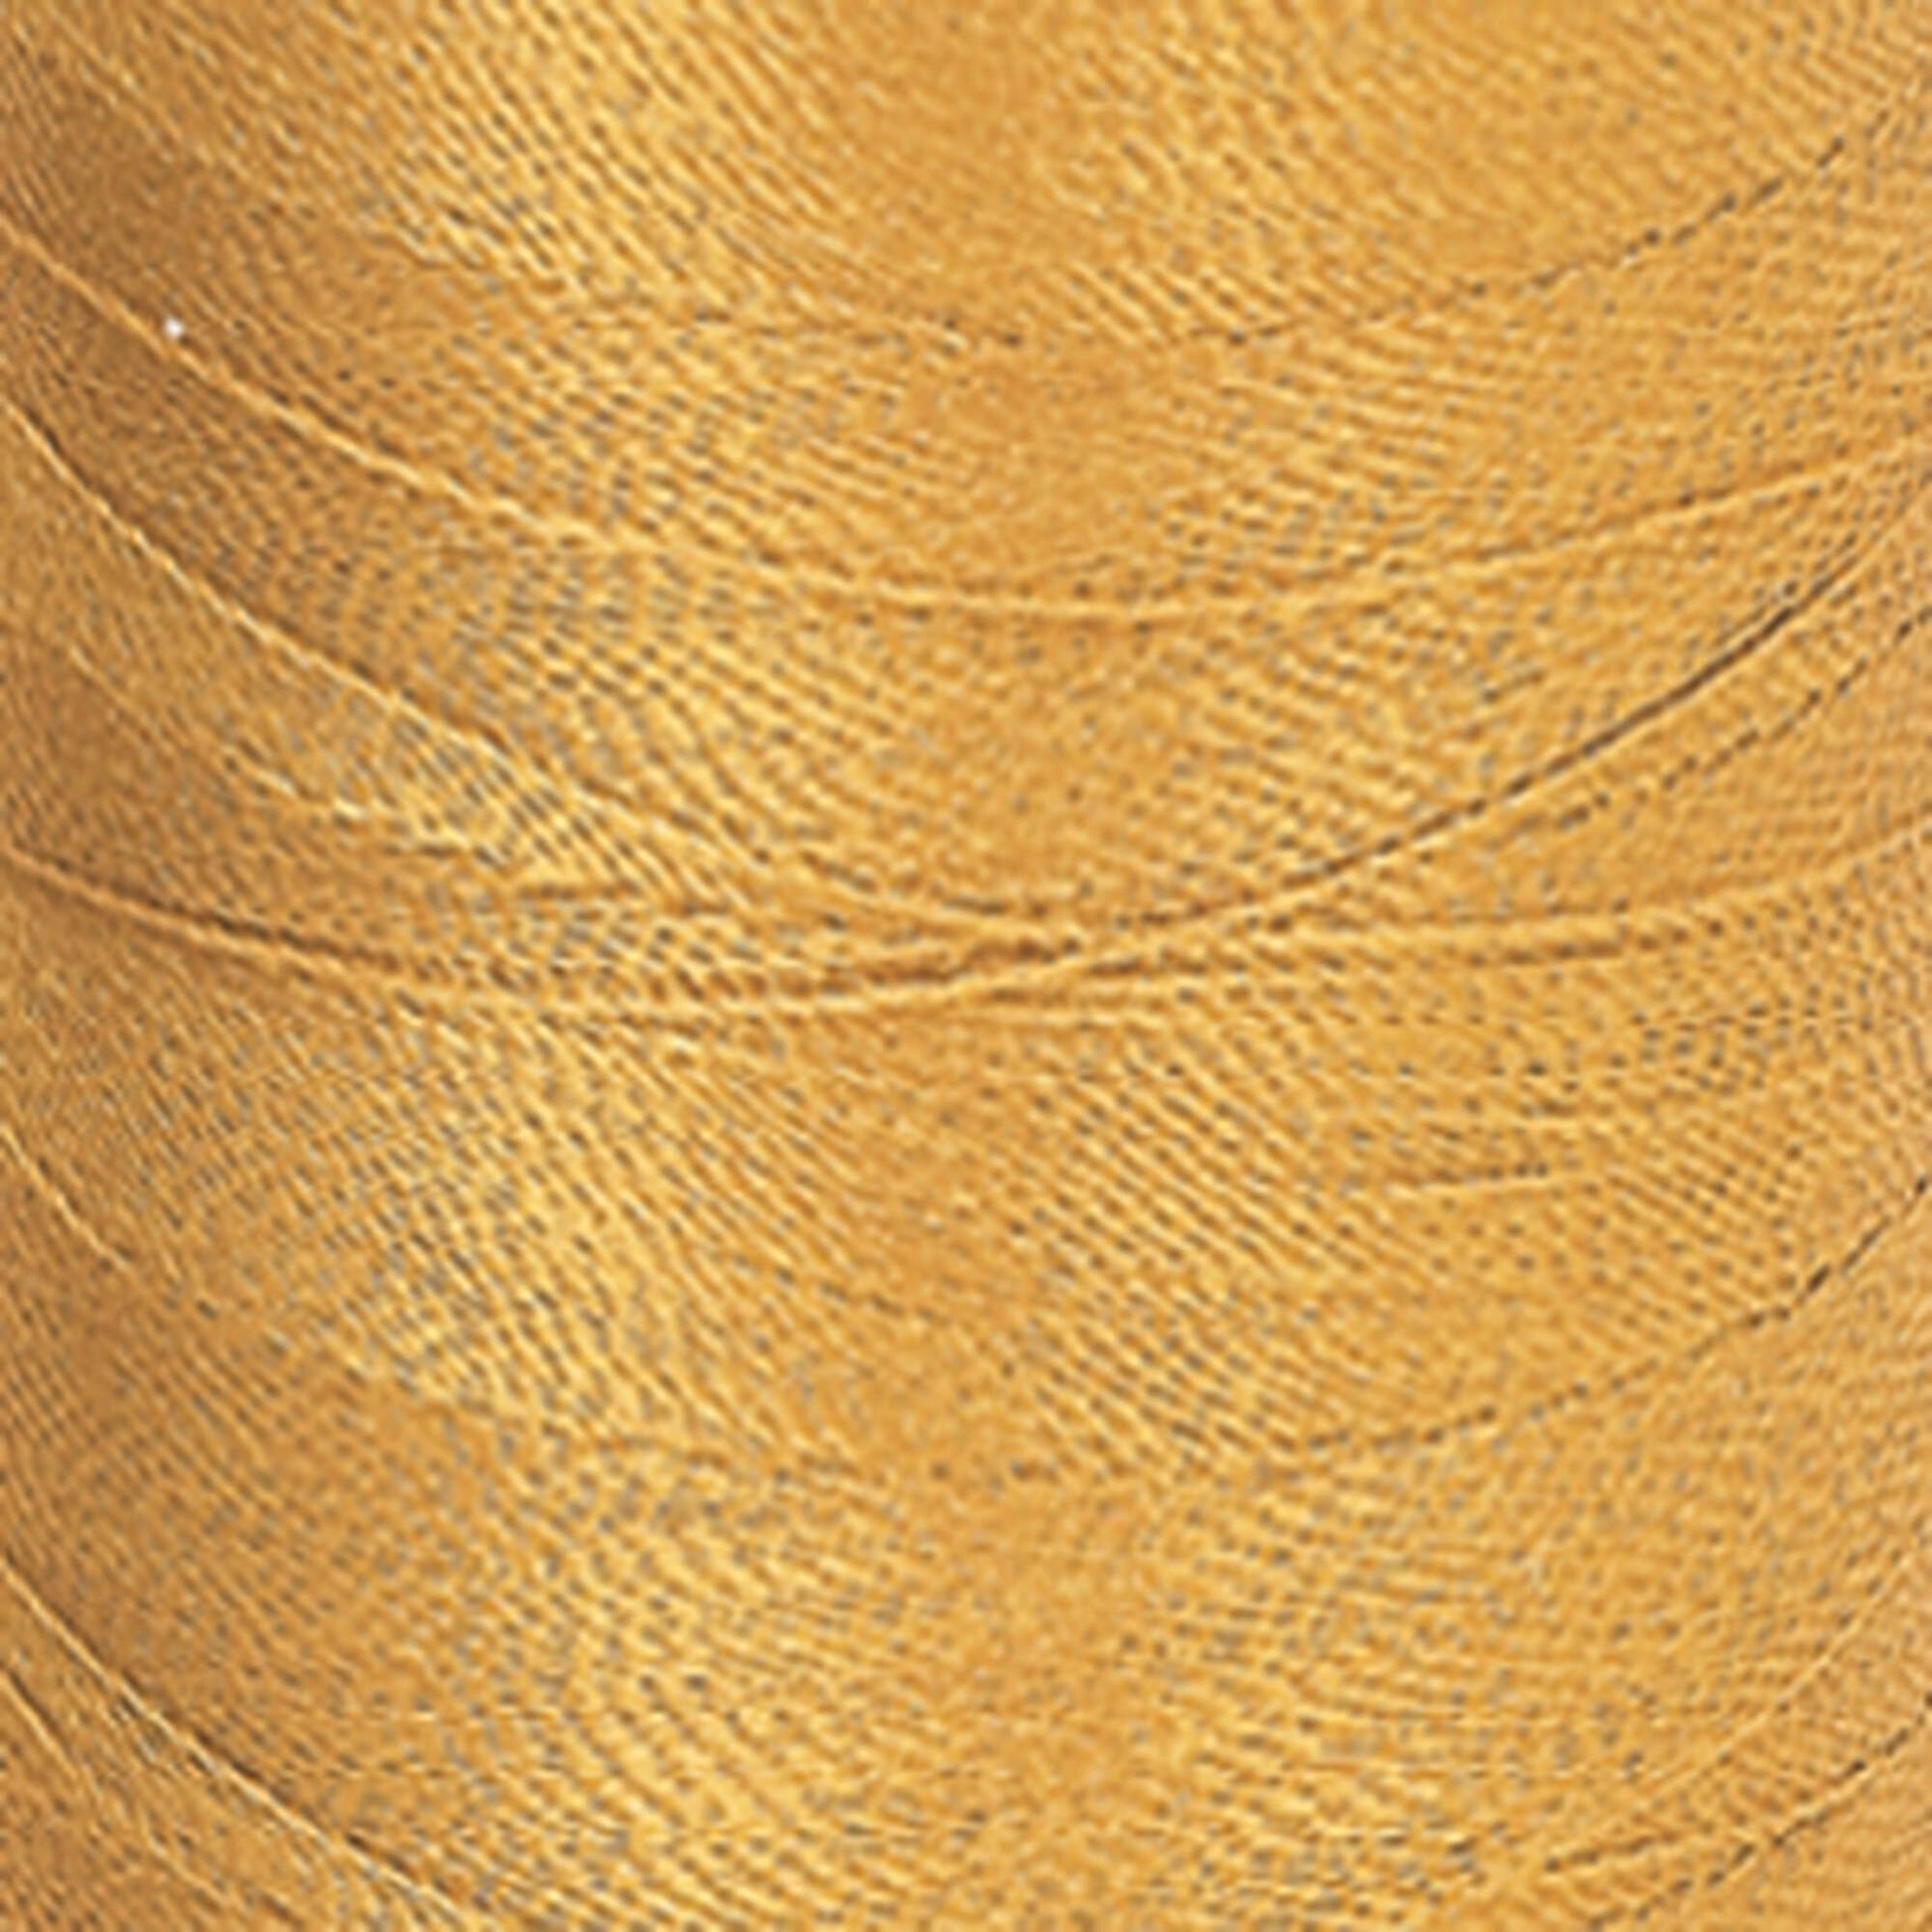 Coats & Clark Machine Embroidery Thread (1100 Yards) Jungle Gold